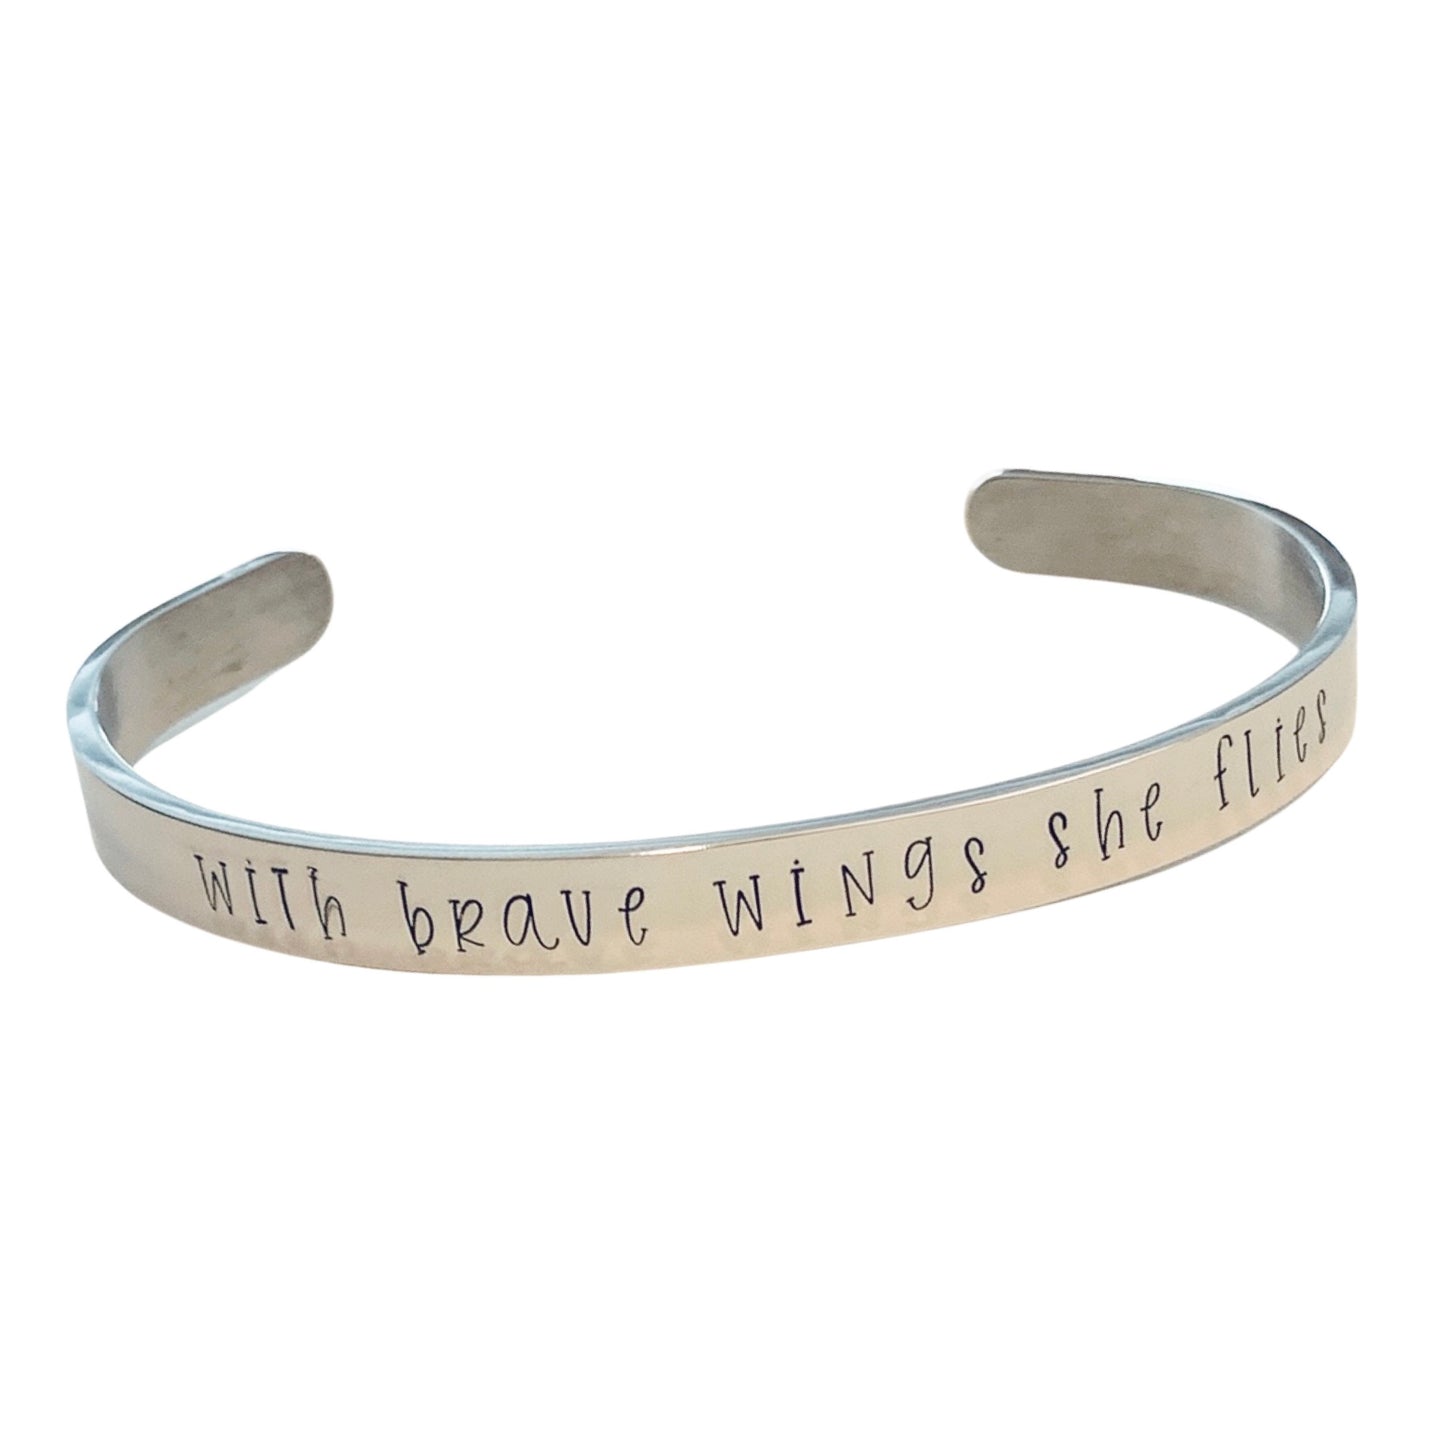 With brave wings she flies - Cuff Bracelet